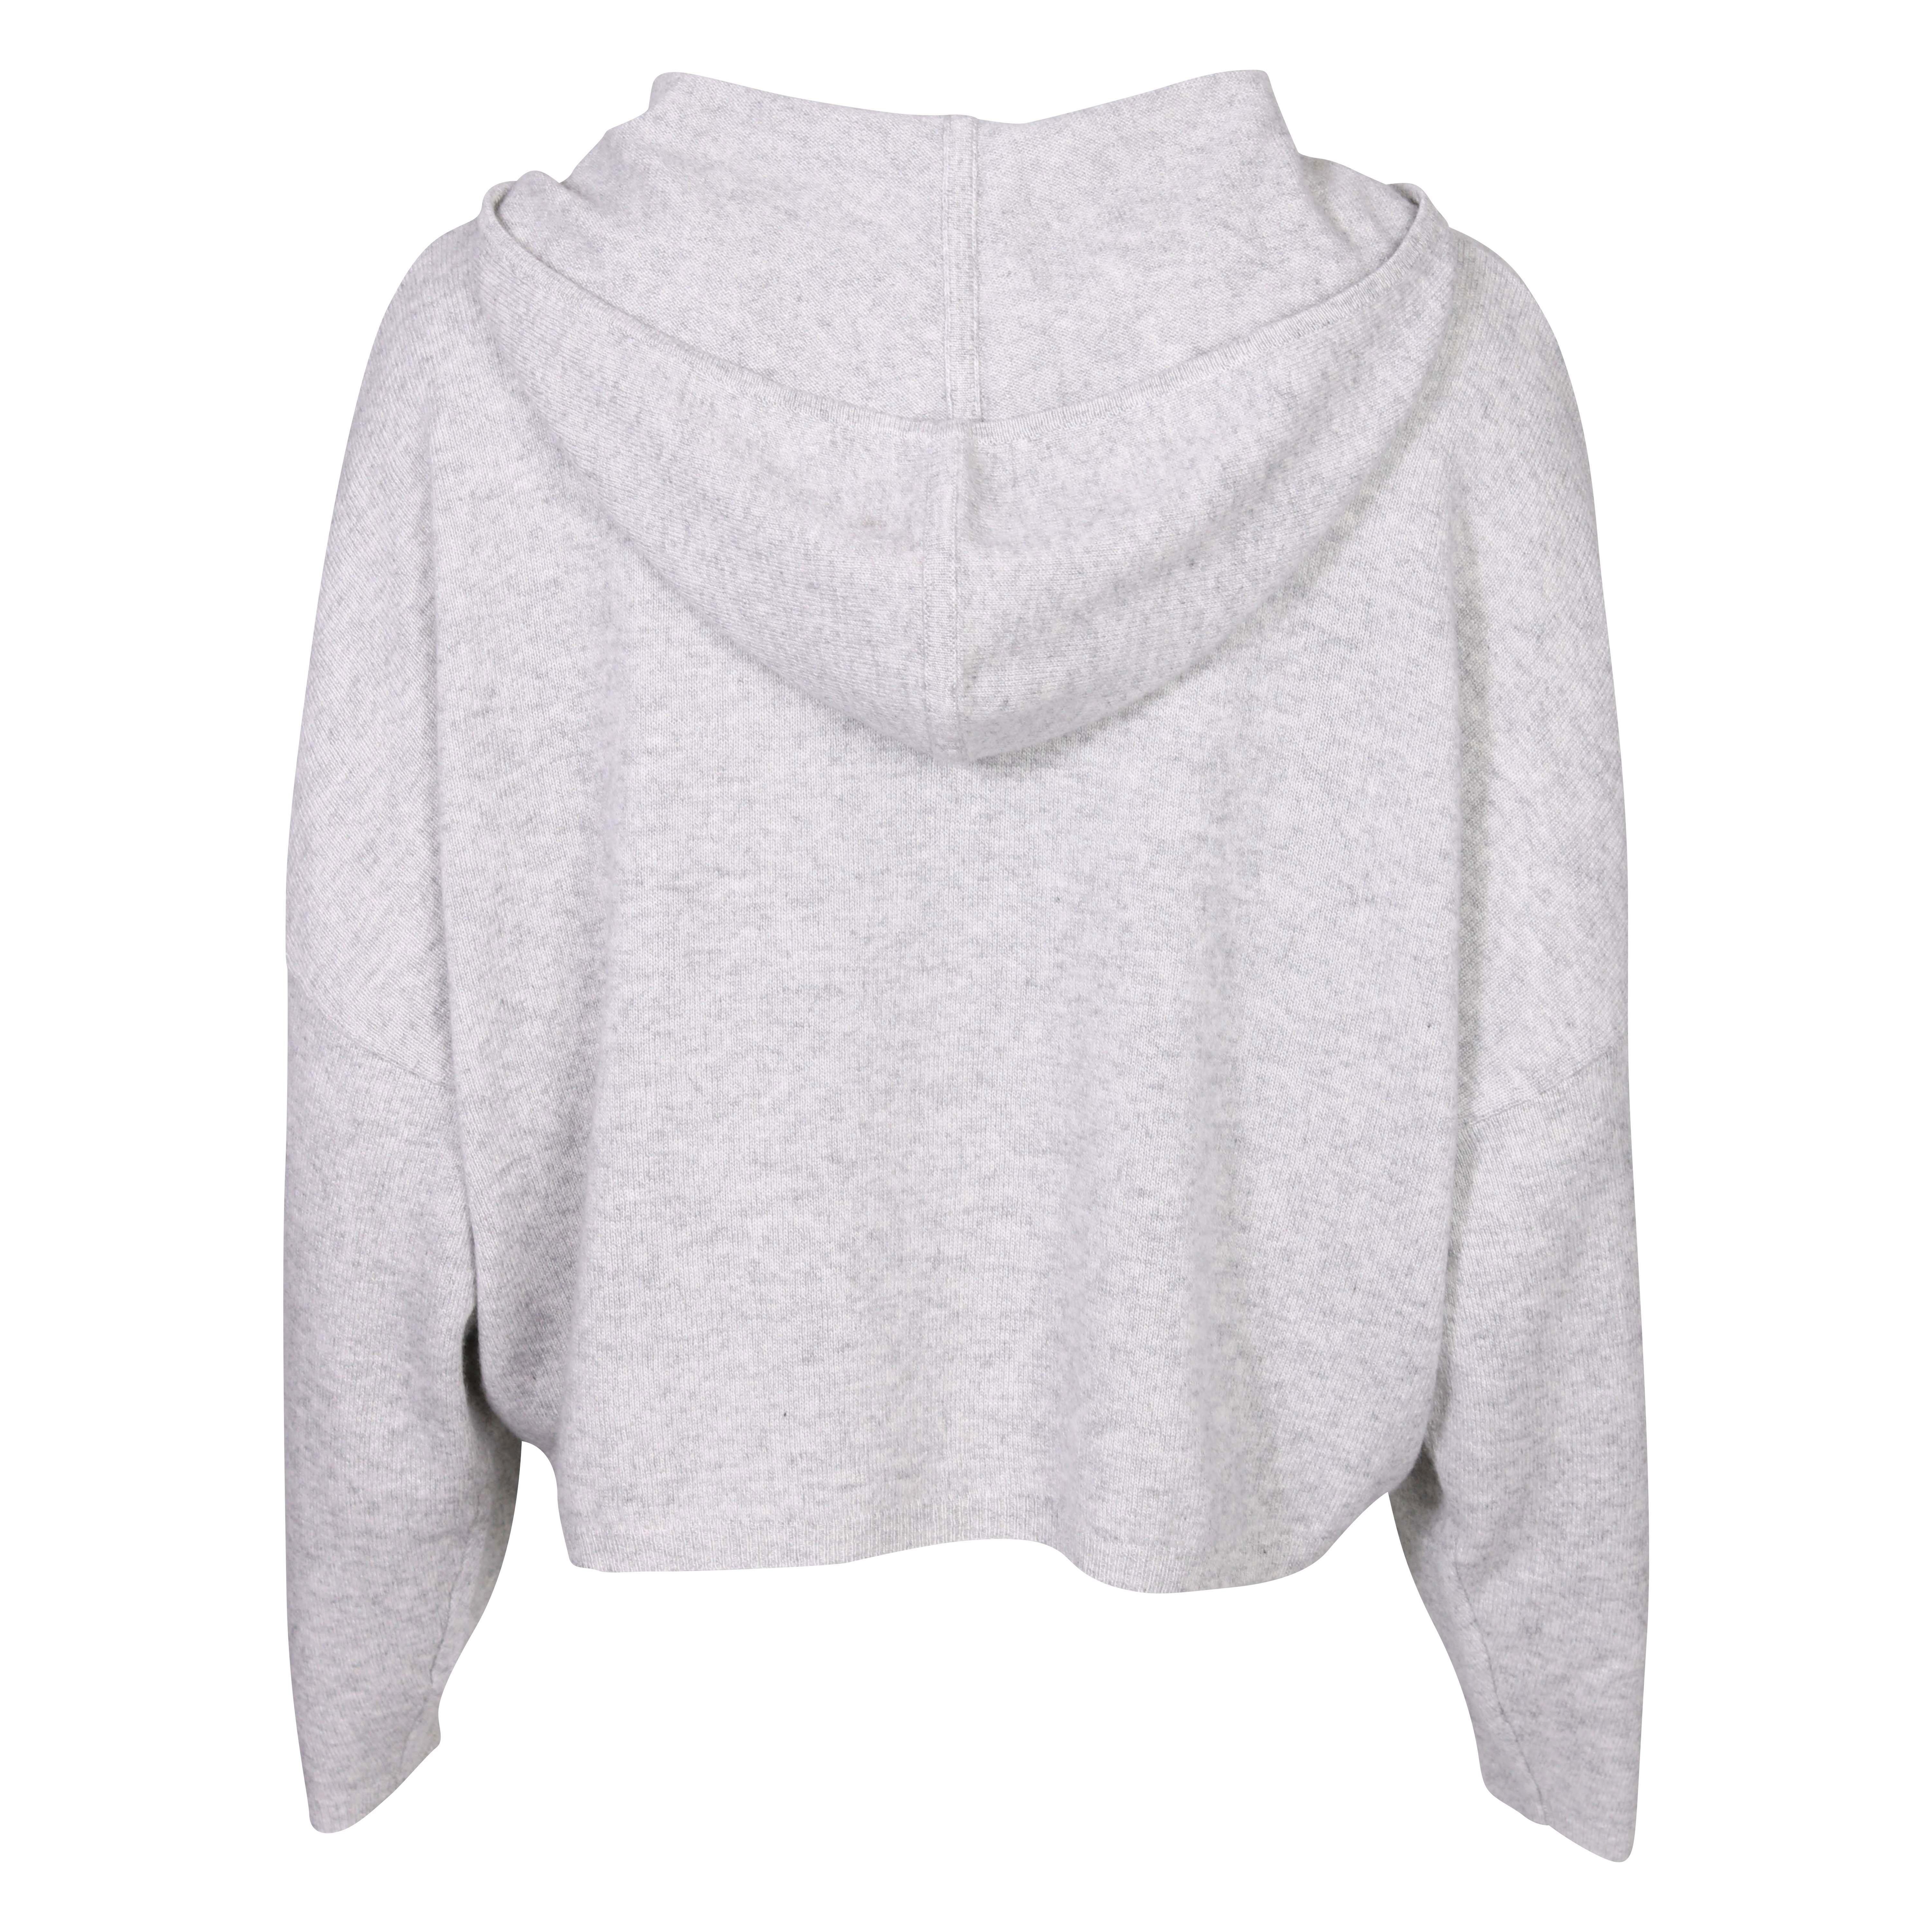 Absolut Cashmere Half Zip Hodded Sweater in Light Grey Melange M